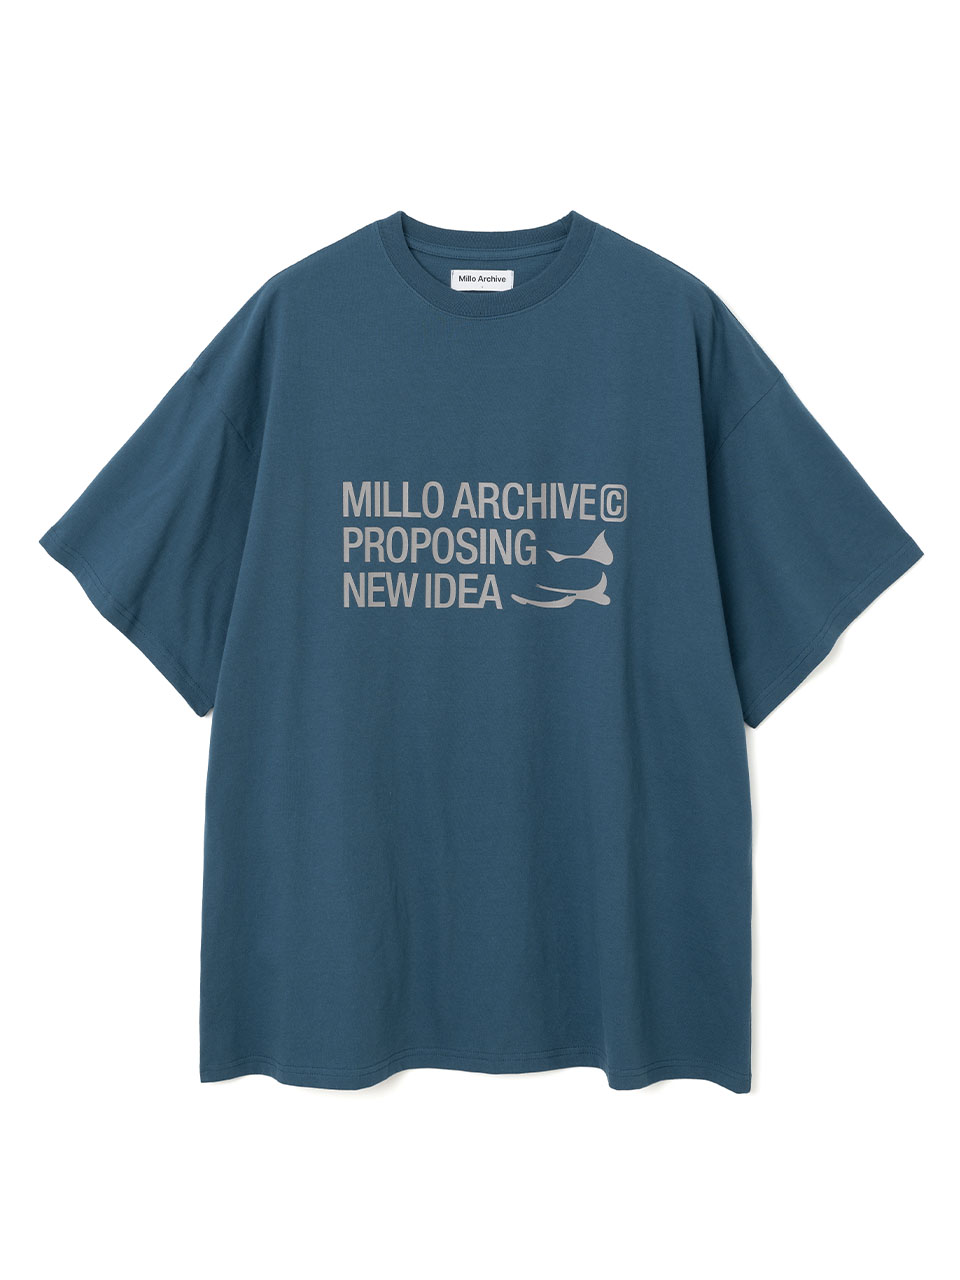 New Idea T-Shirts [Space Blue]